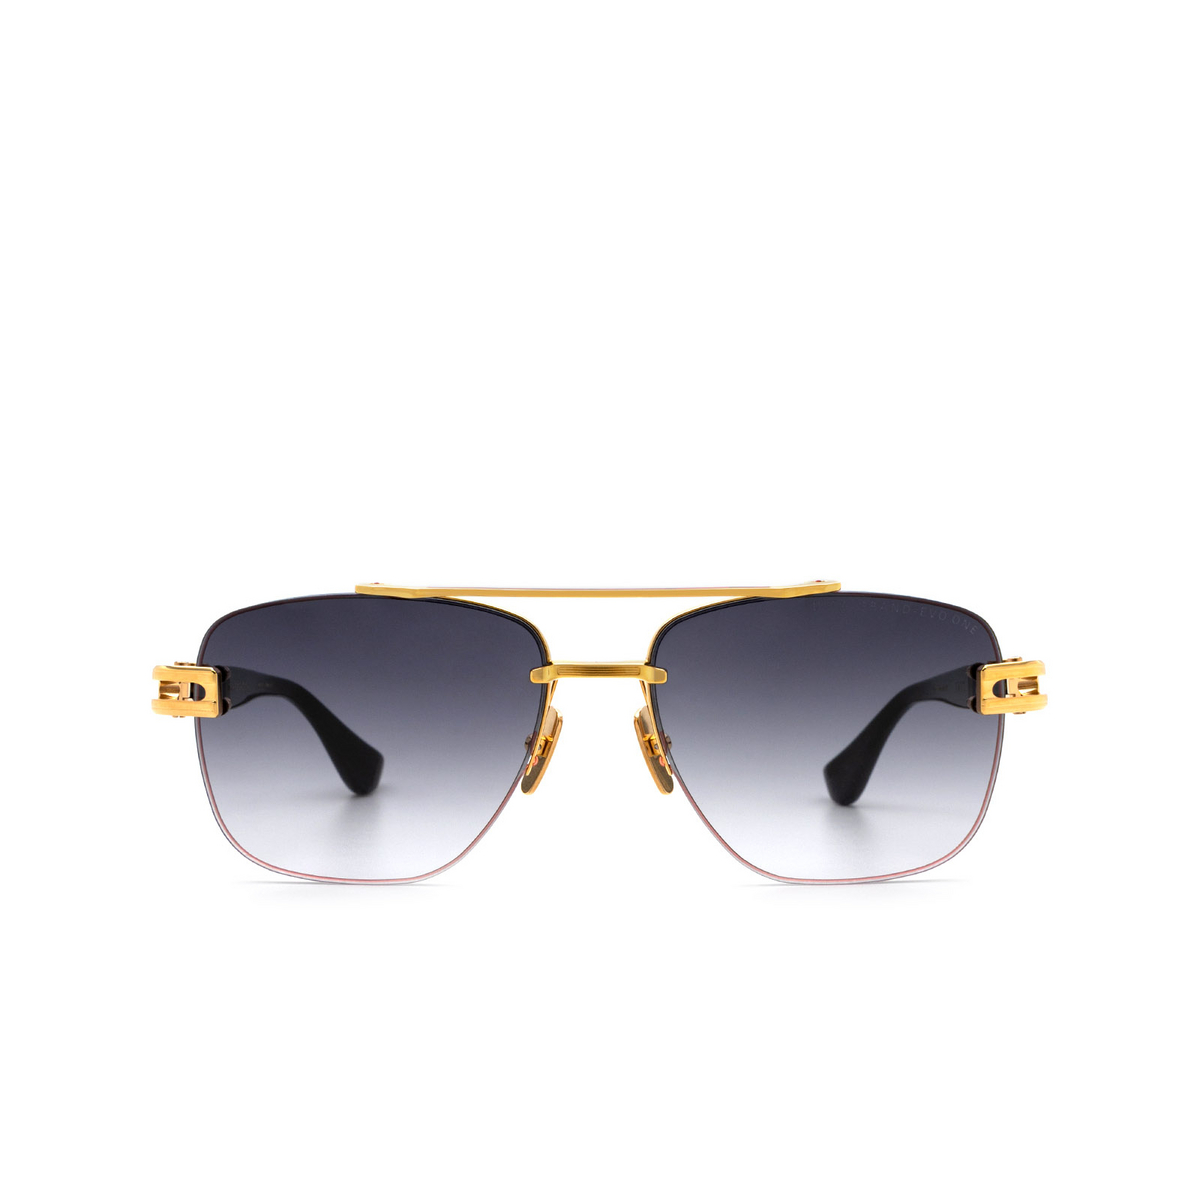 Dita® Aviator Sunglasses: Grand-evo One DTS138-A-01-Z color Gold Black Gld-blk - front view.